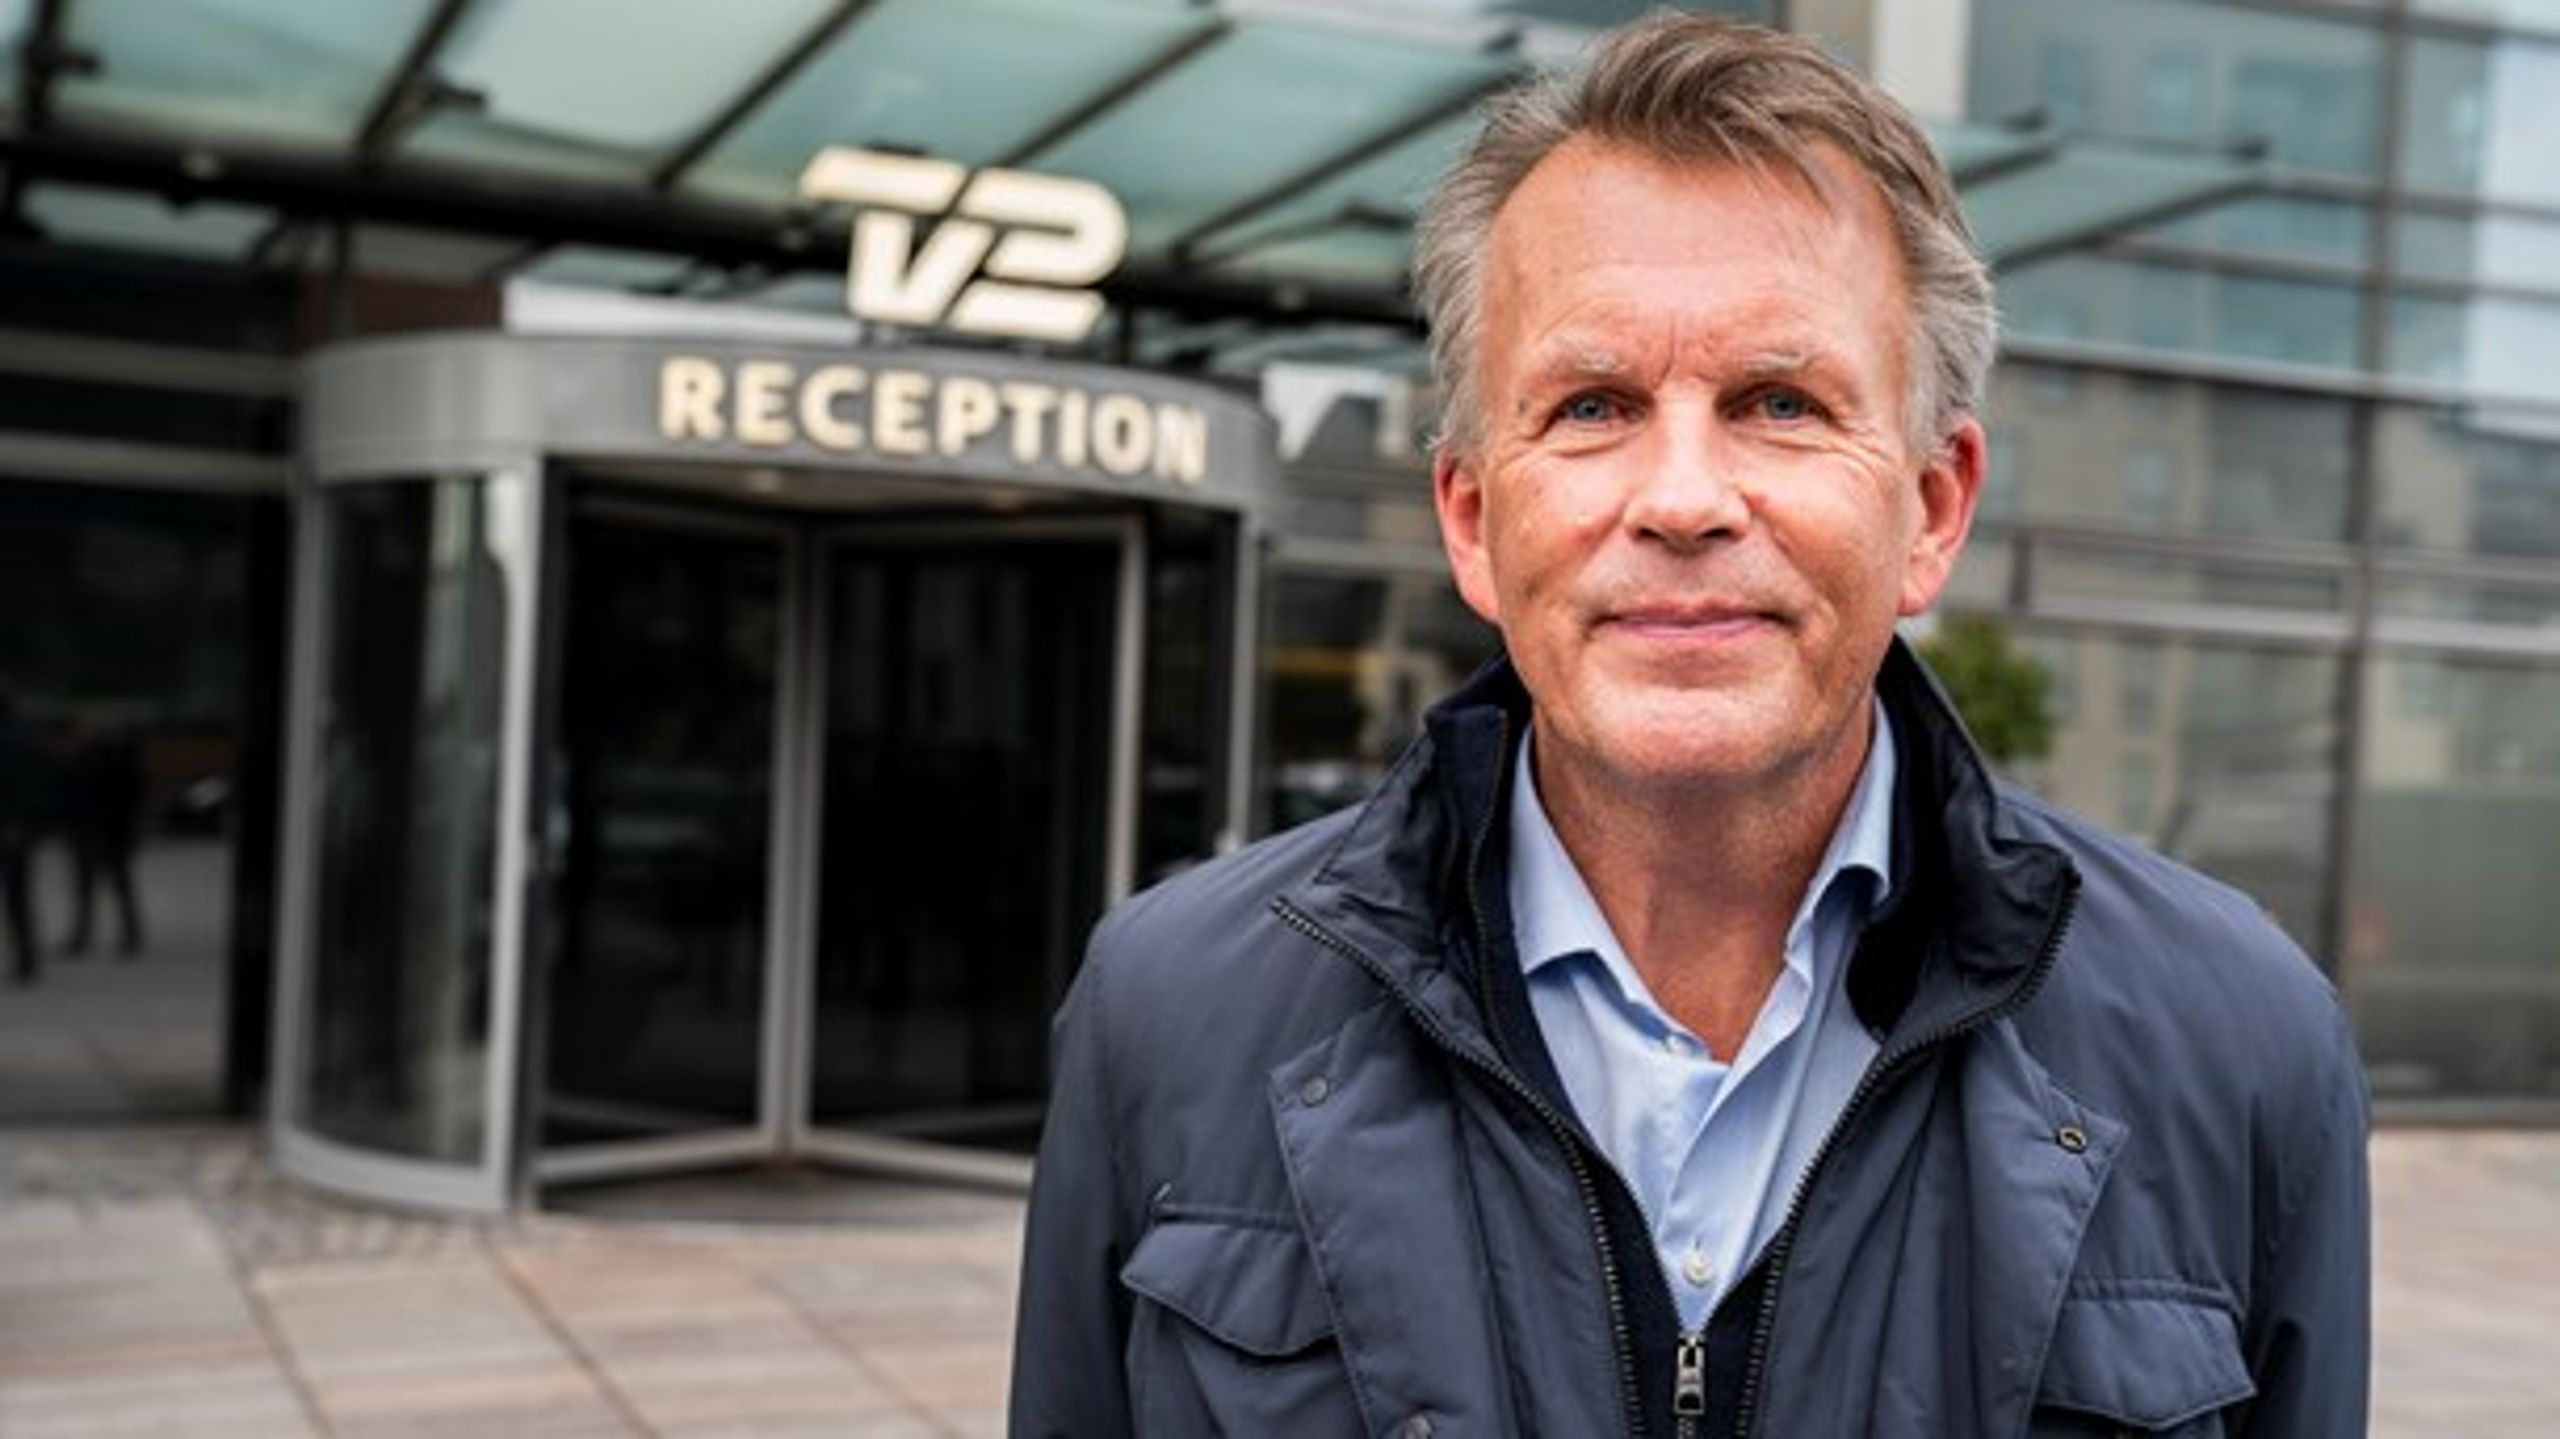 Mikkel Hertz stopper som nyhedsdirektør for TV2 og fortsætter i stedet som journalistisk chef.